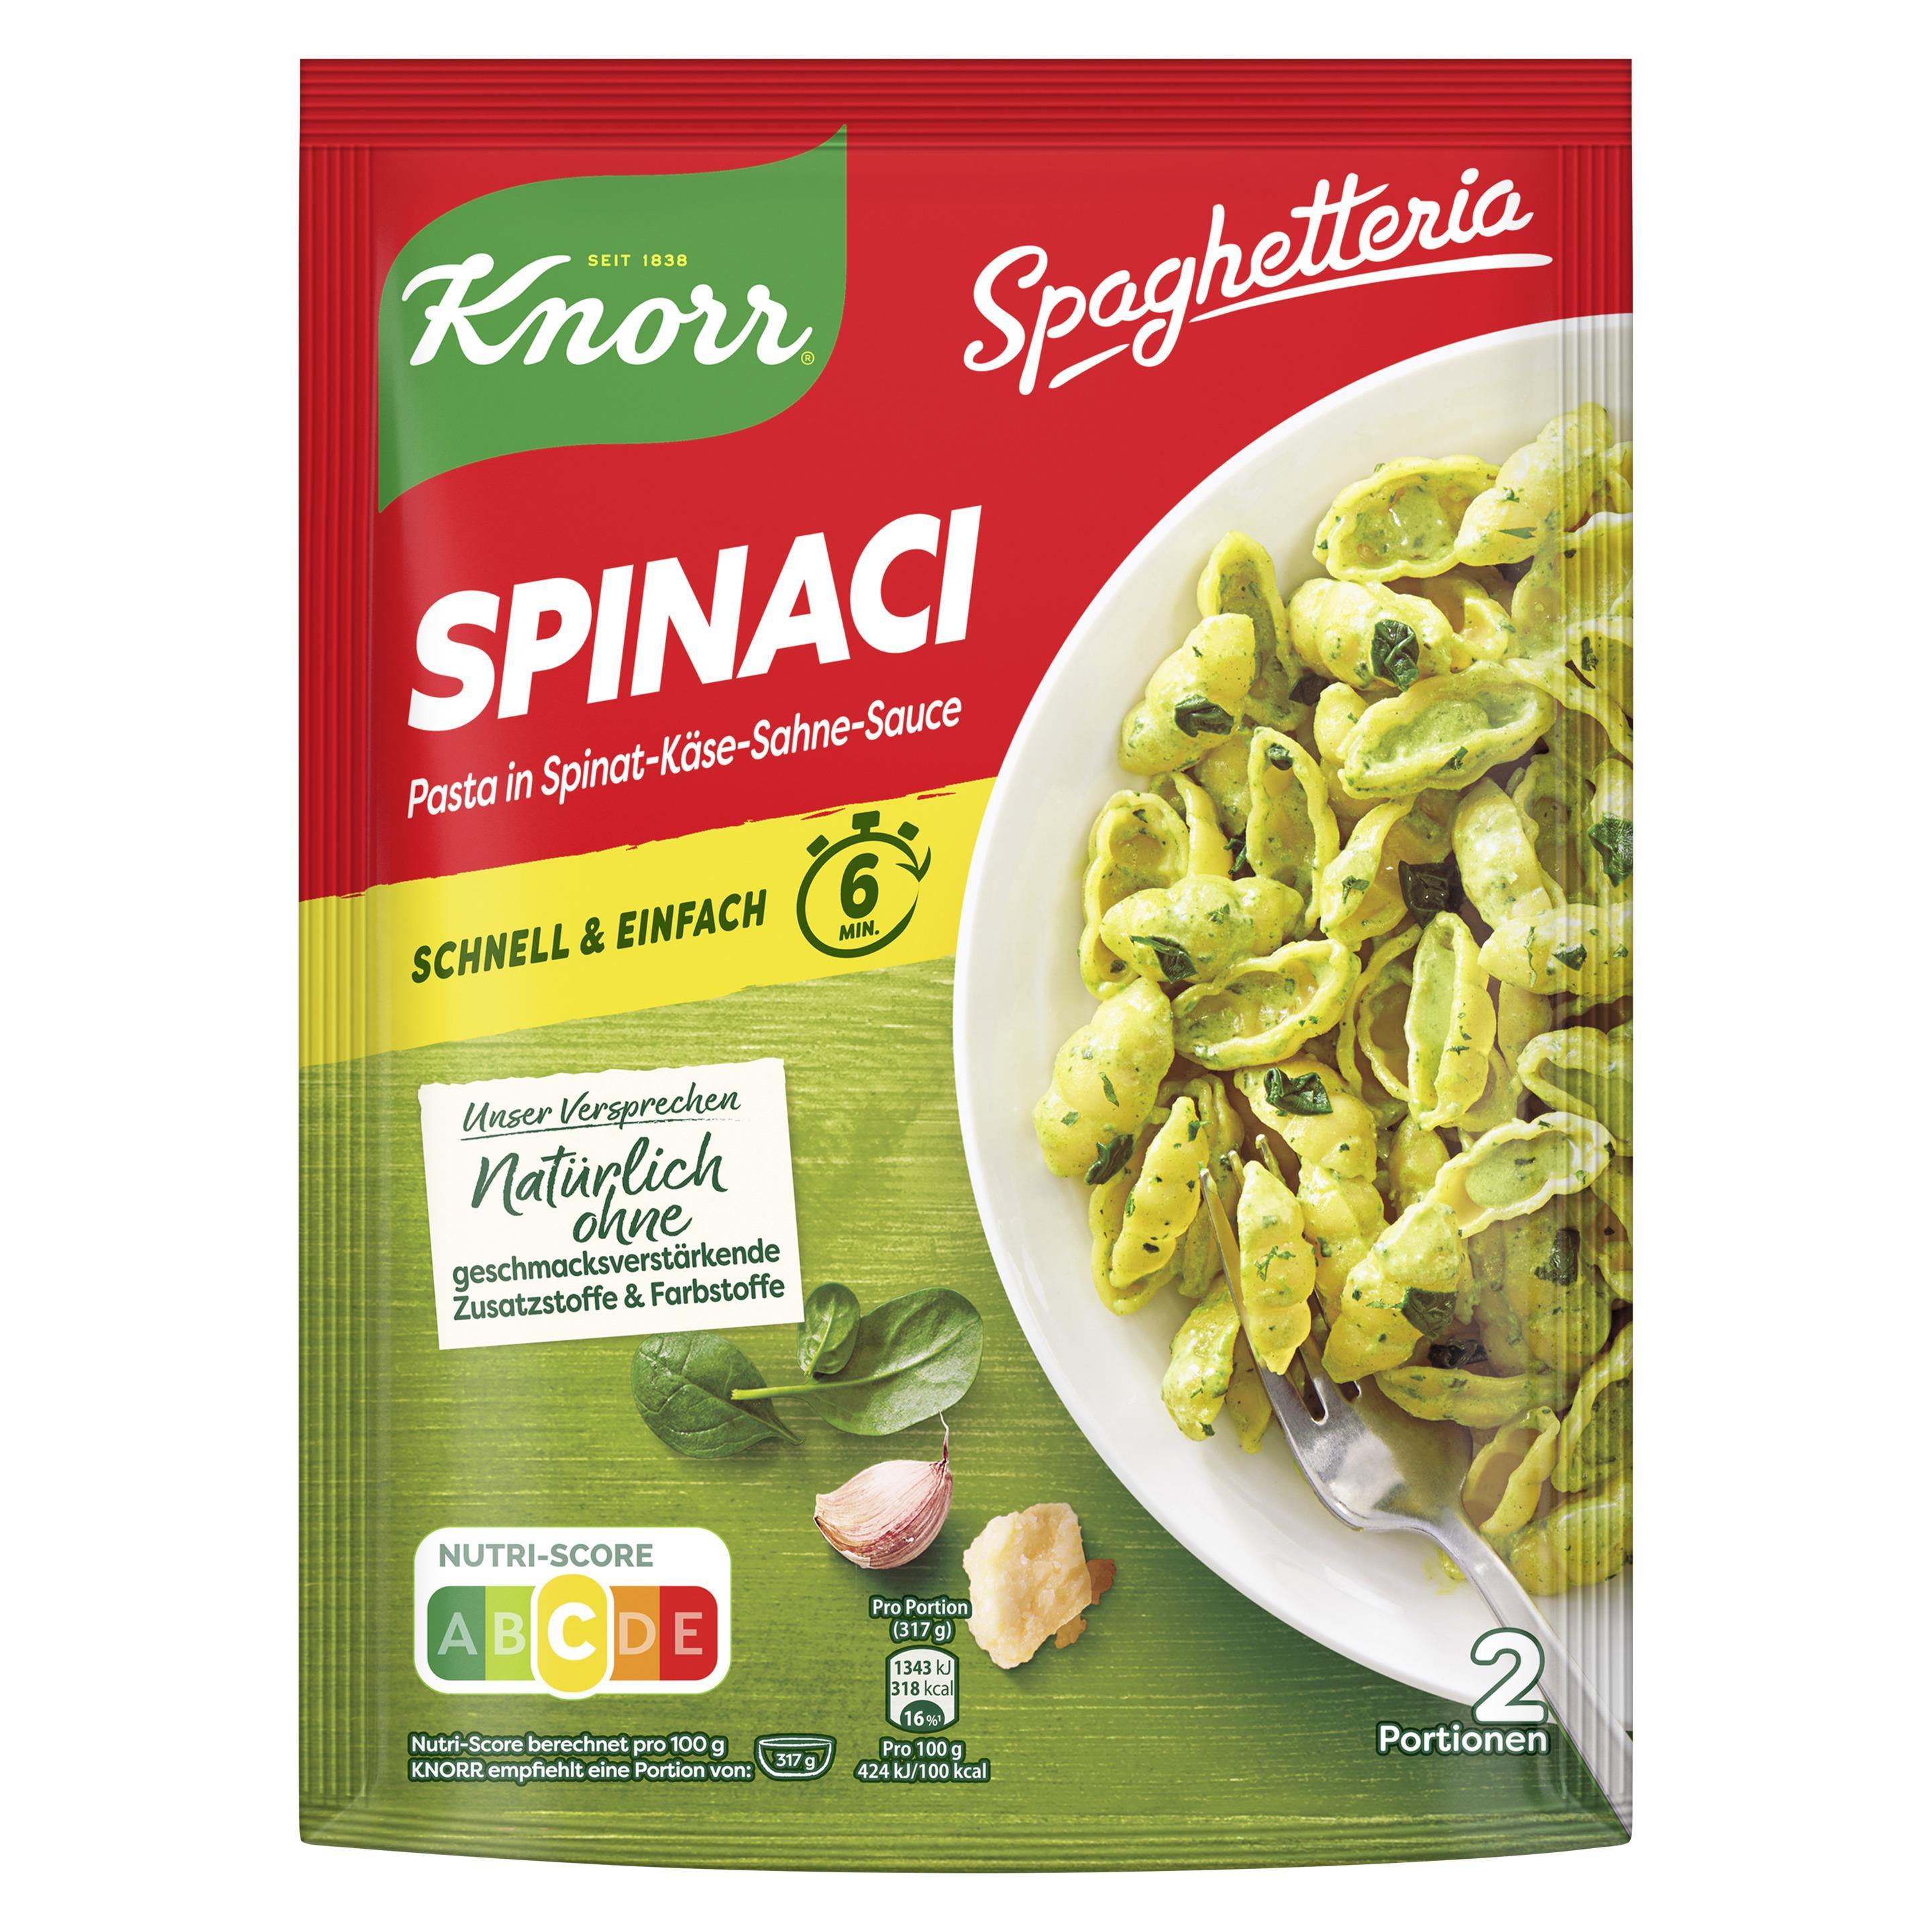 Knorr Spaghetteria Spinaci 160 g